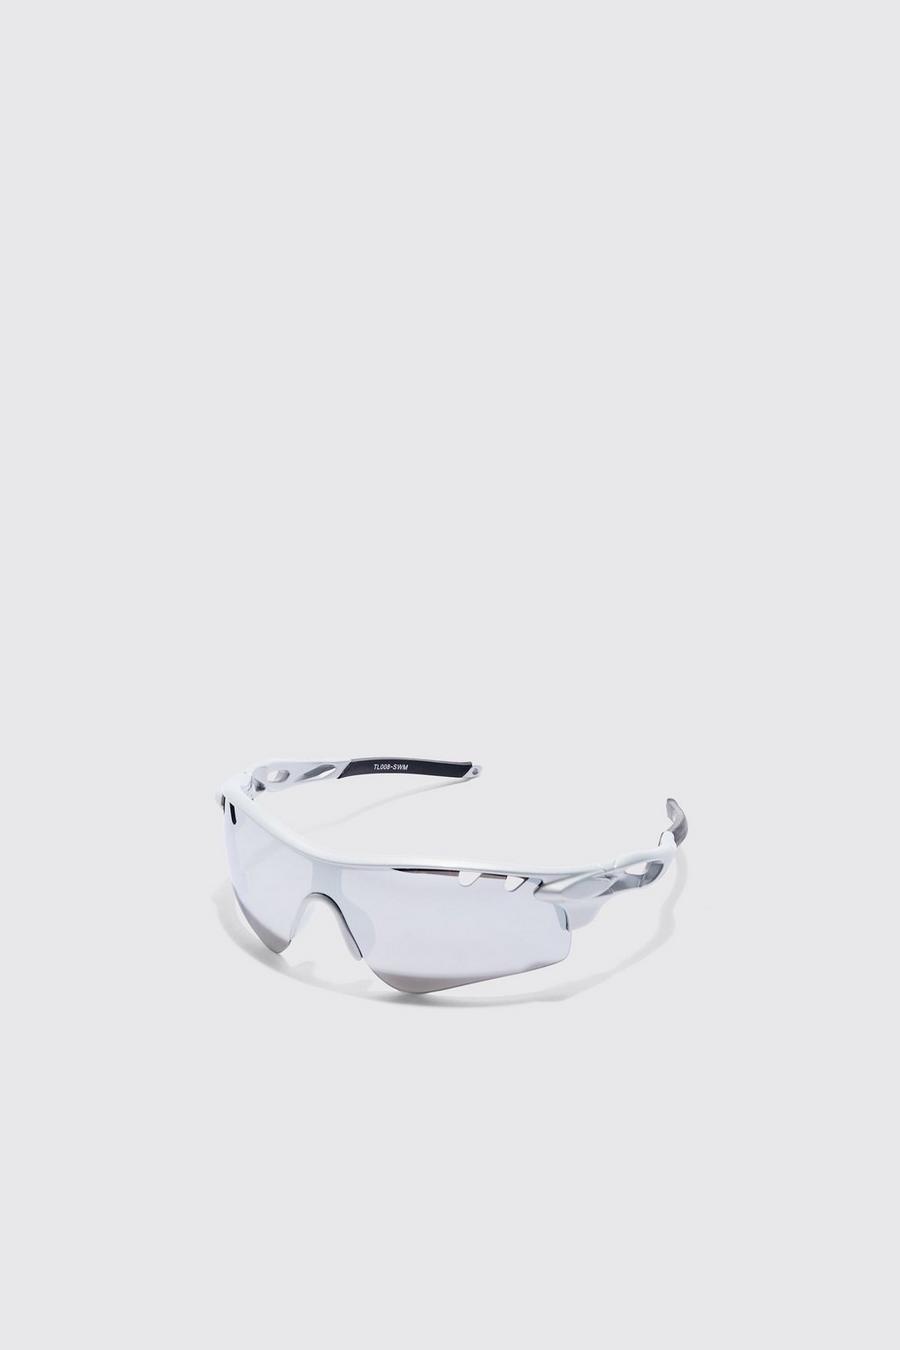 Gafas de sol inclinadas con lentes cromadas, Silver